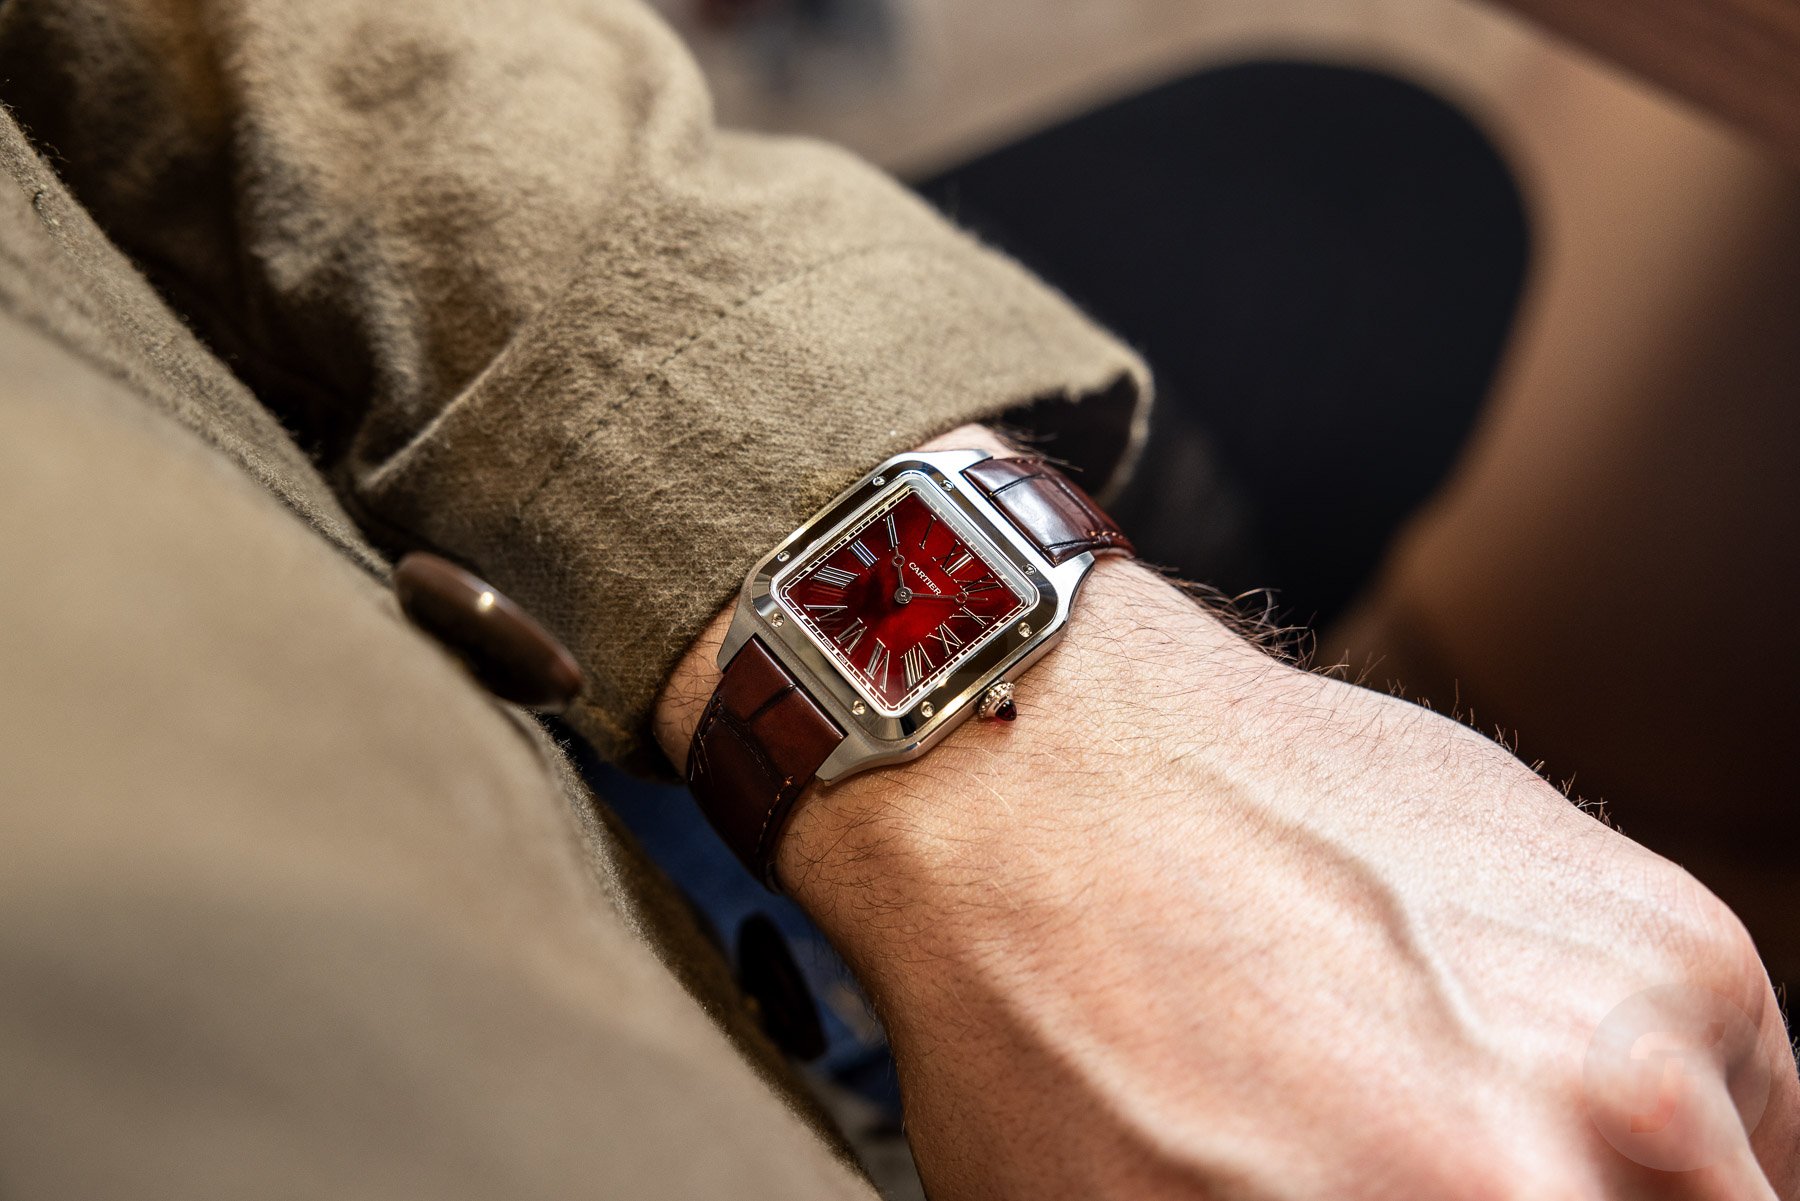 Harry Winston reveals a new watch made from Zallium, a high tech alloy